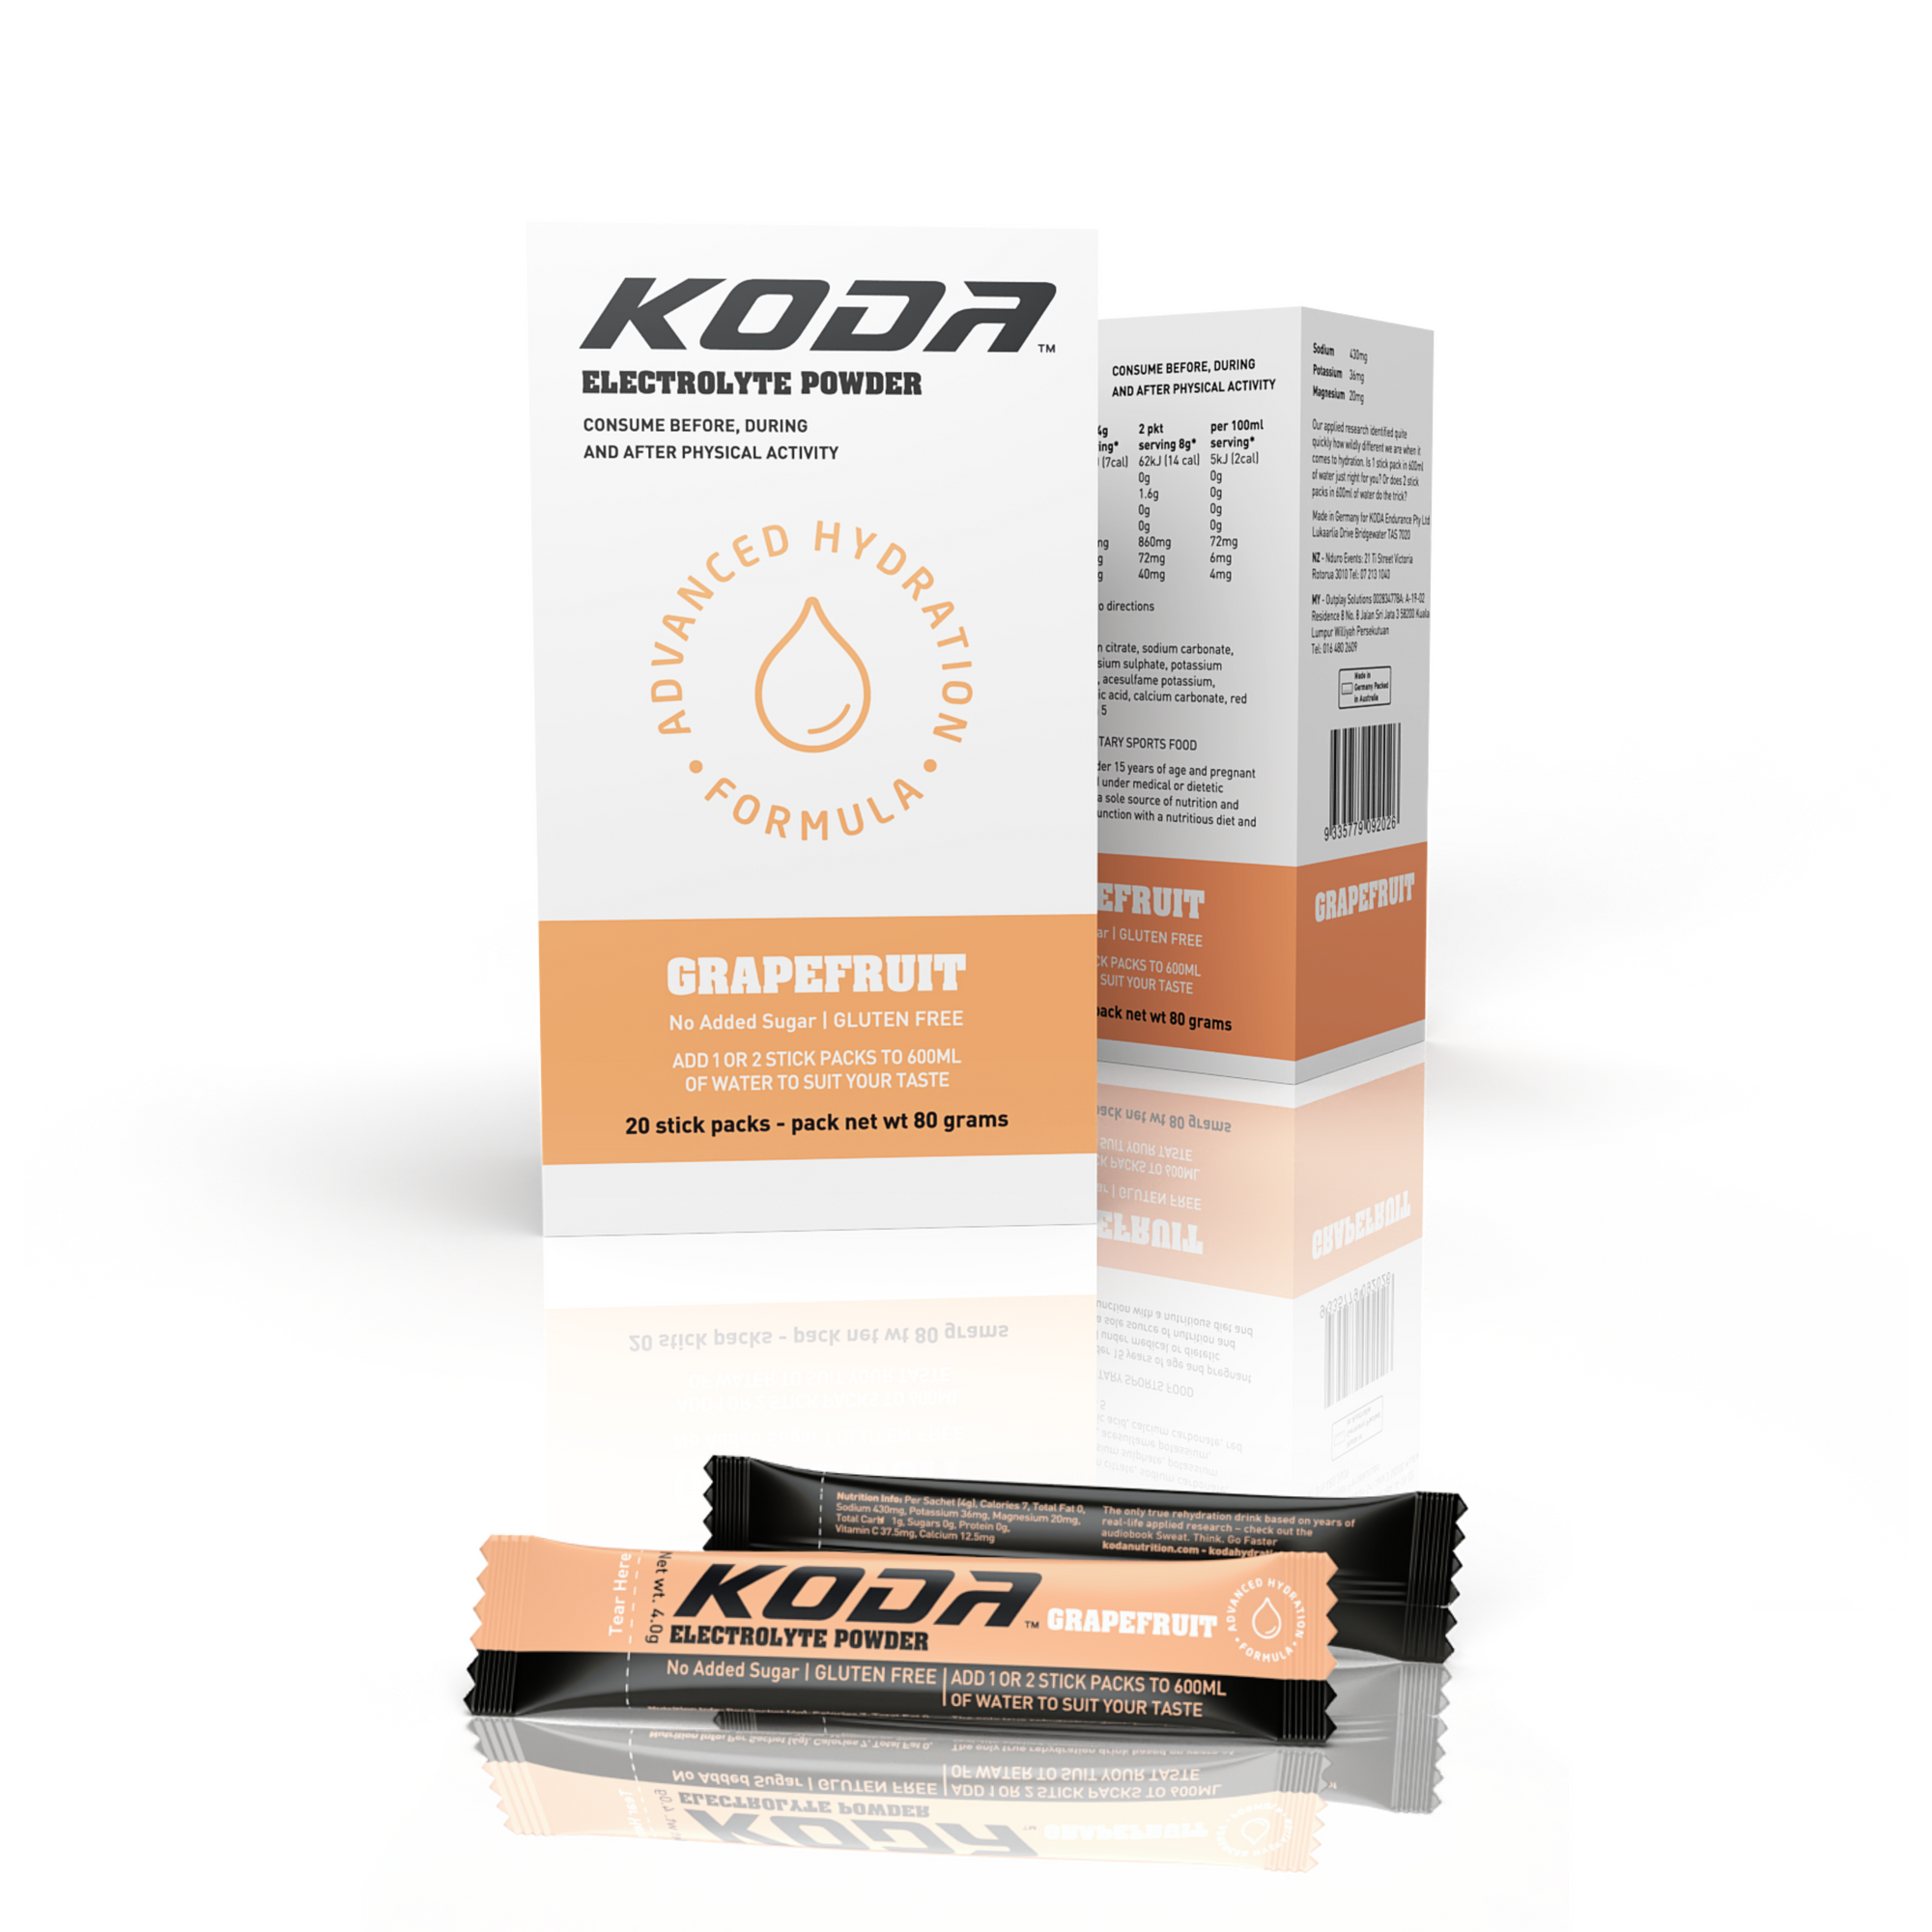 Grapefruit - KODA Electrolyte Powder (20 Stick Pack)